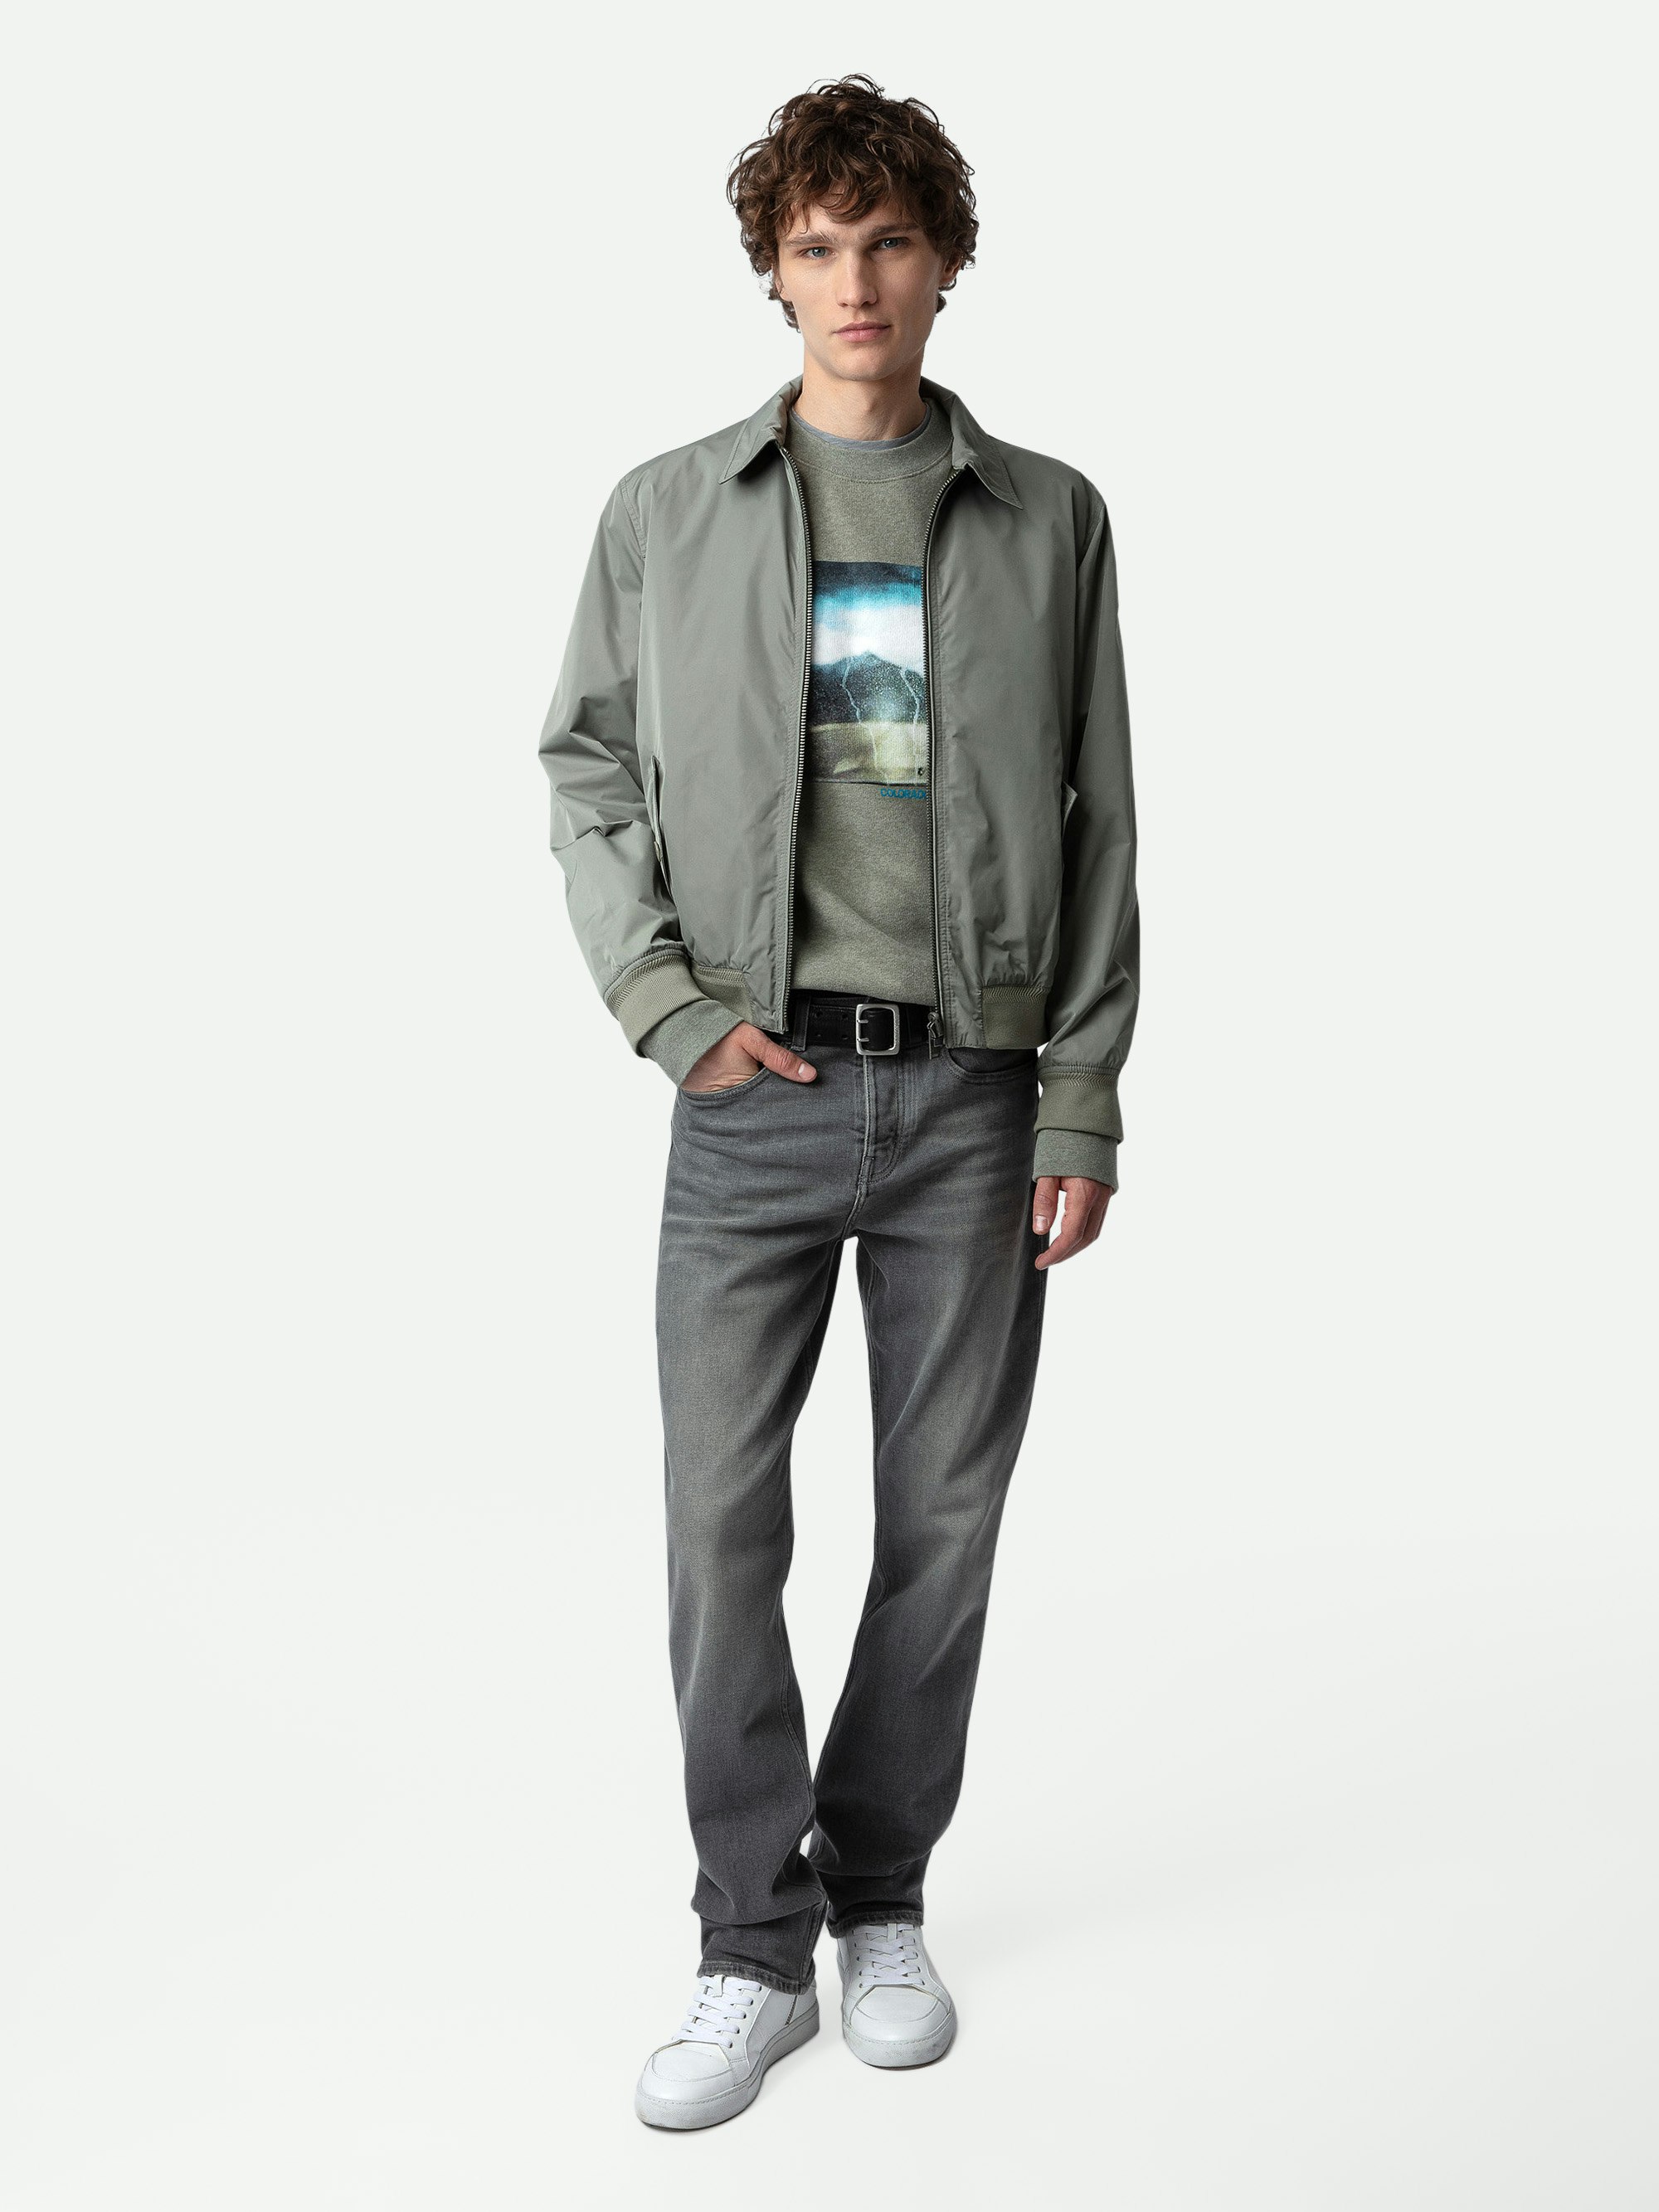 Mate Jacket - Reversible light green and khaki nylon jacket with rubber Studio Homme badge.